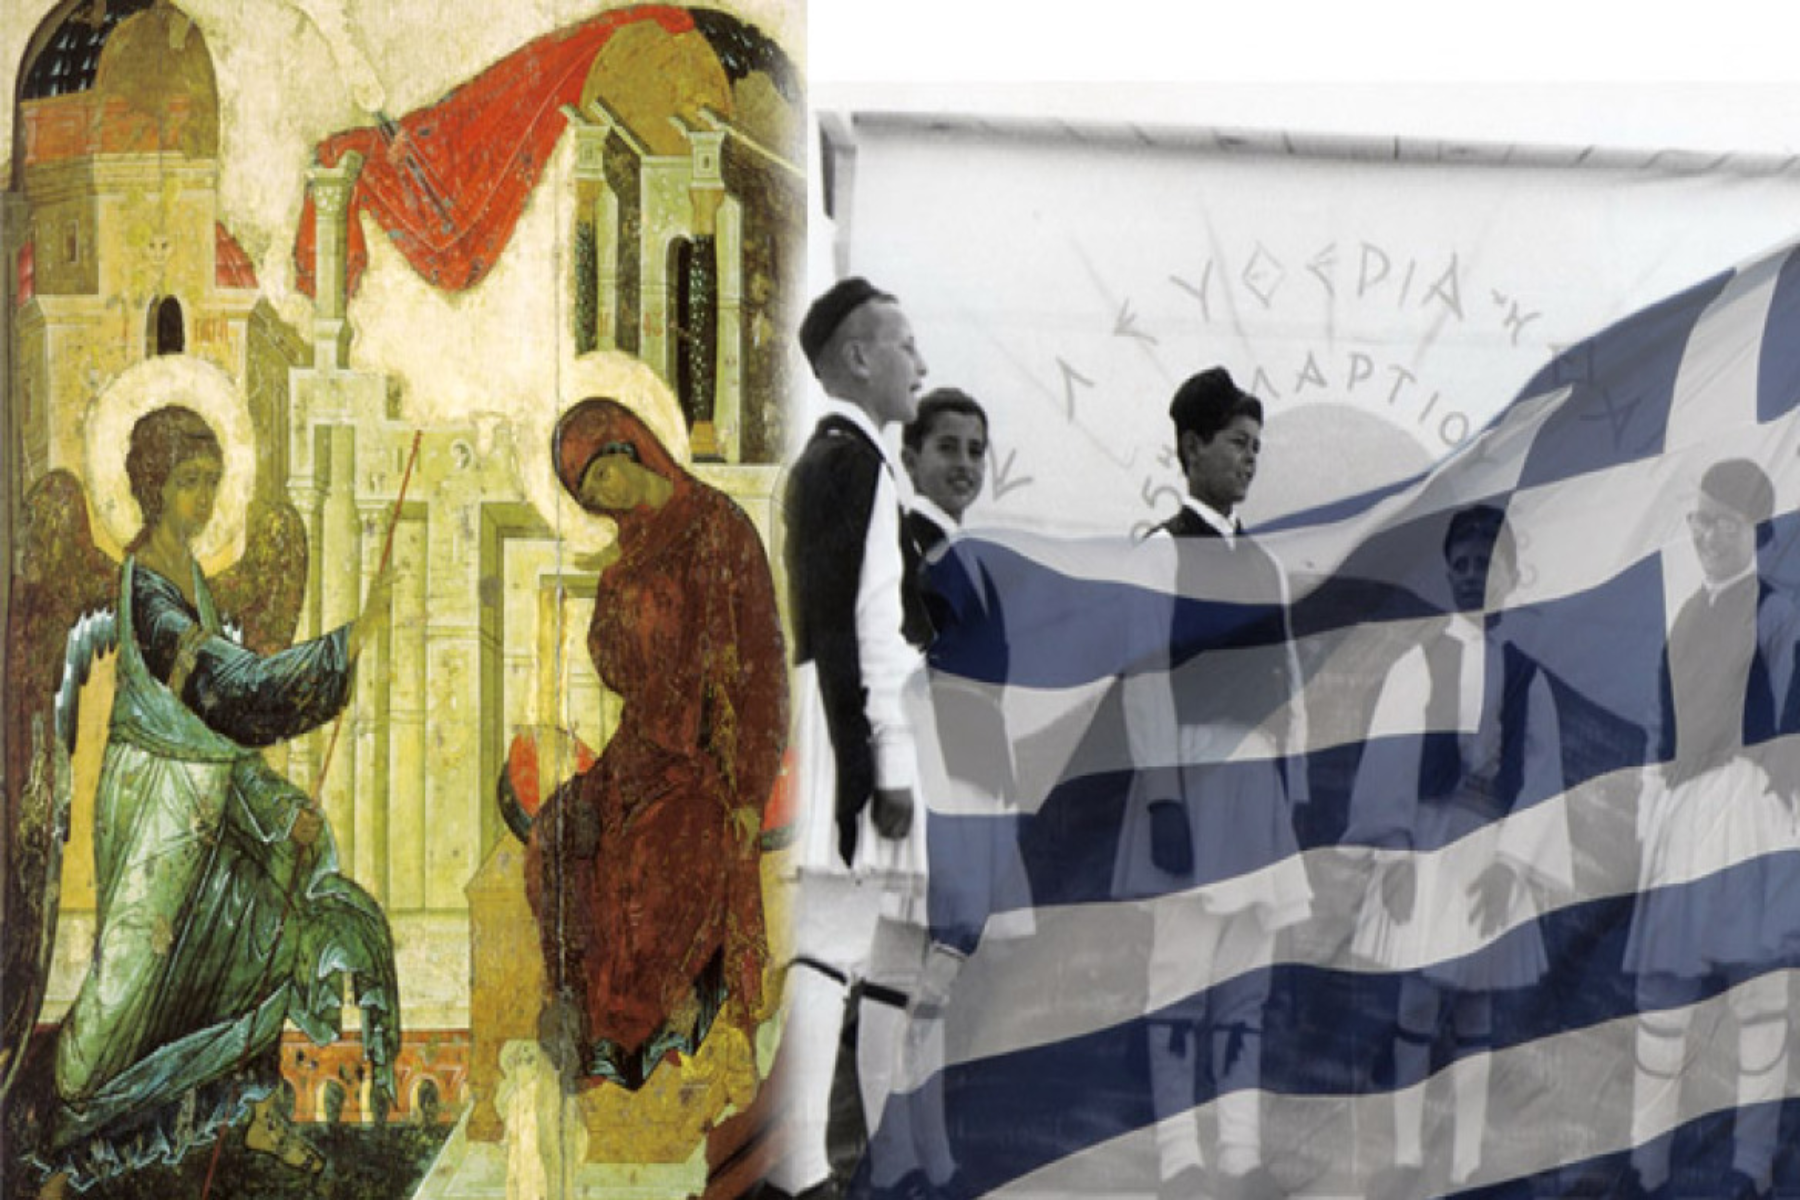 Google Doodle: Αφιερωμένο στη  ελληνική επανάσταση το σημερινό google doodle